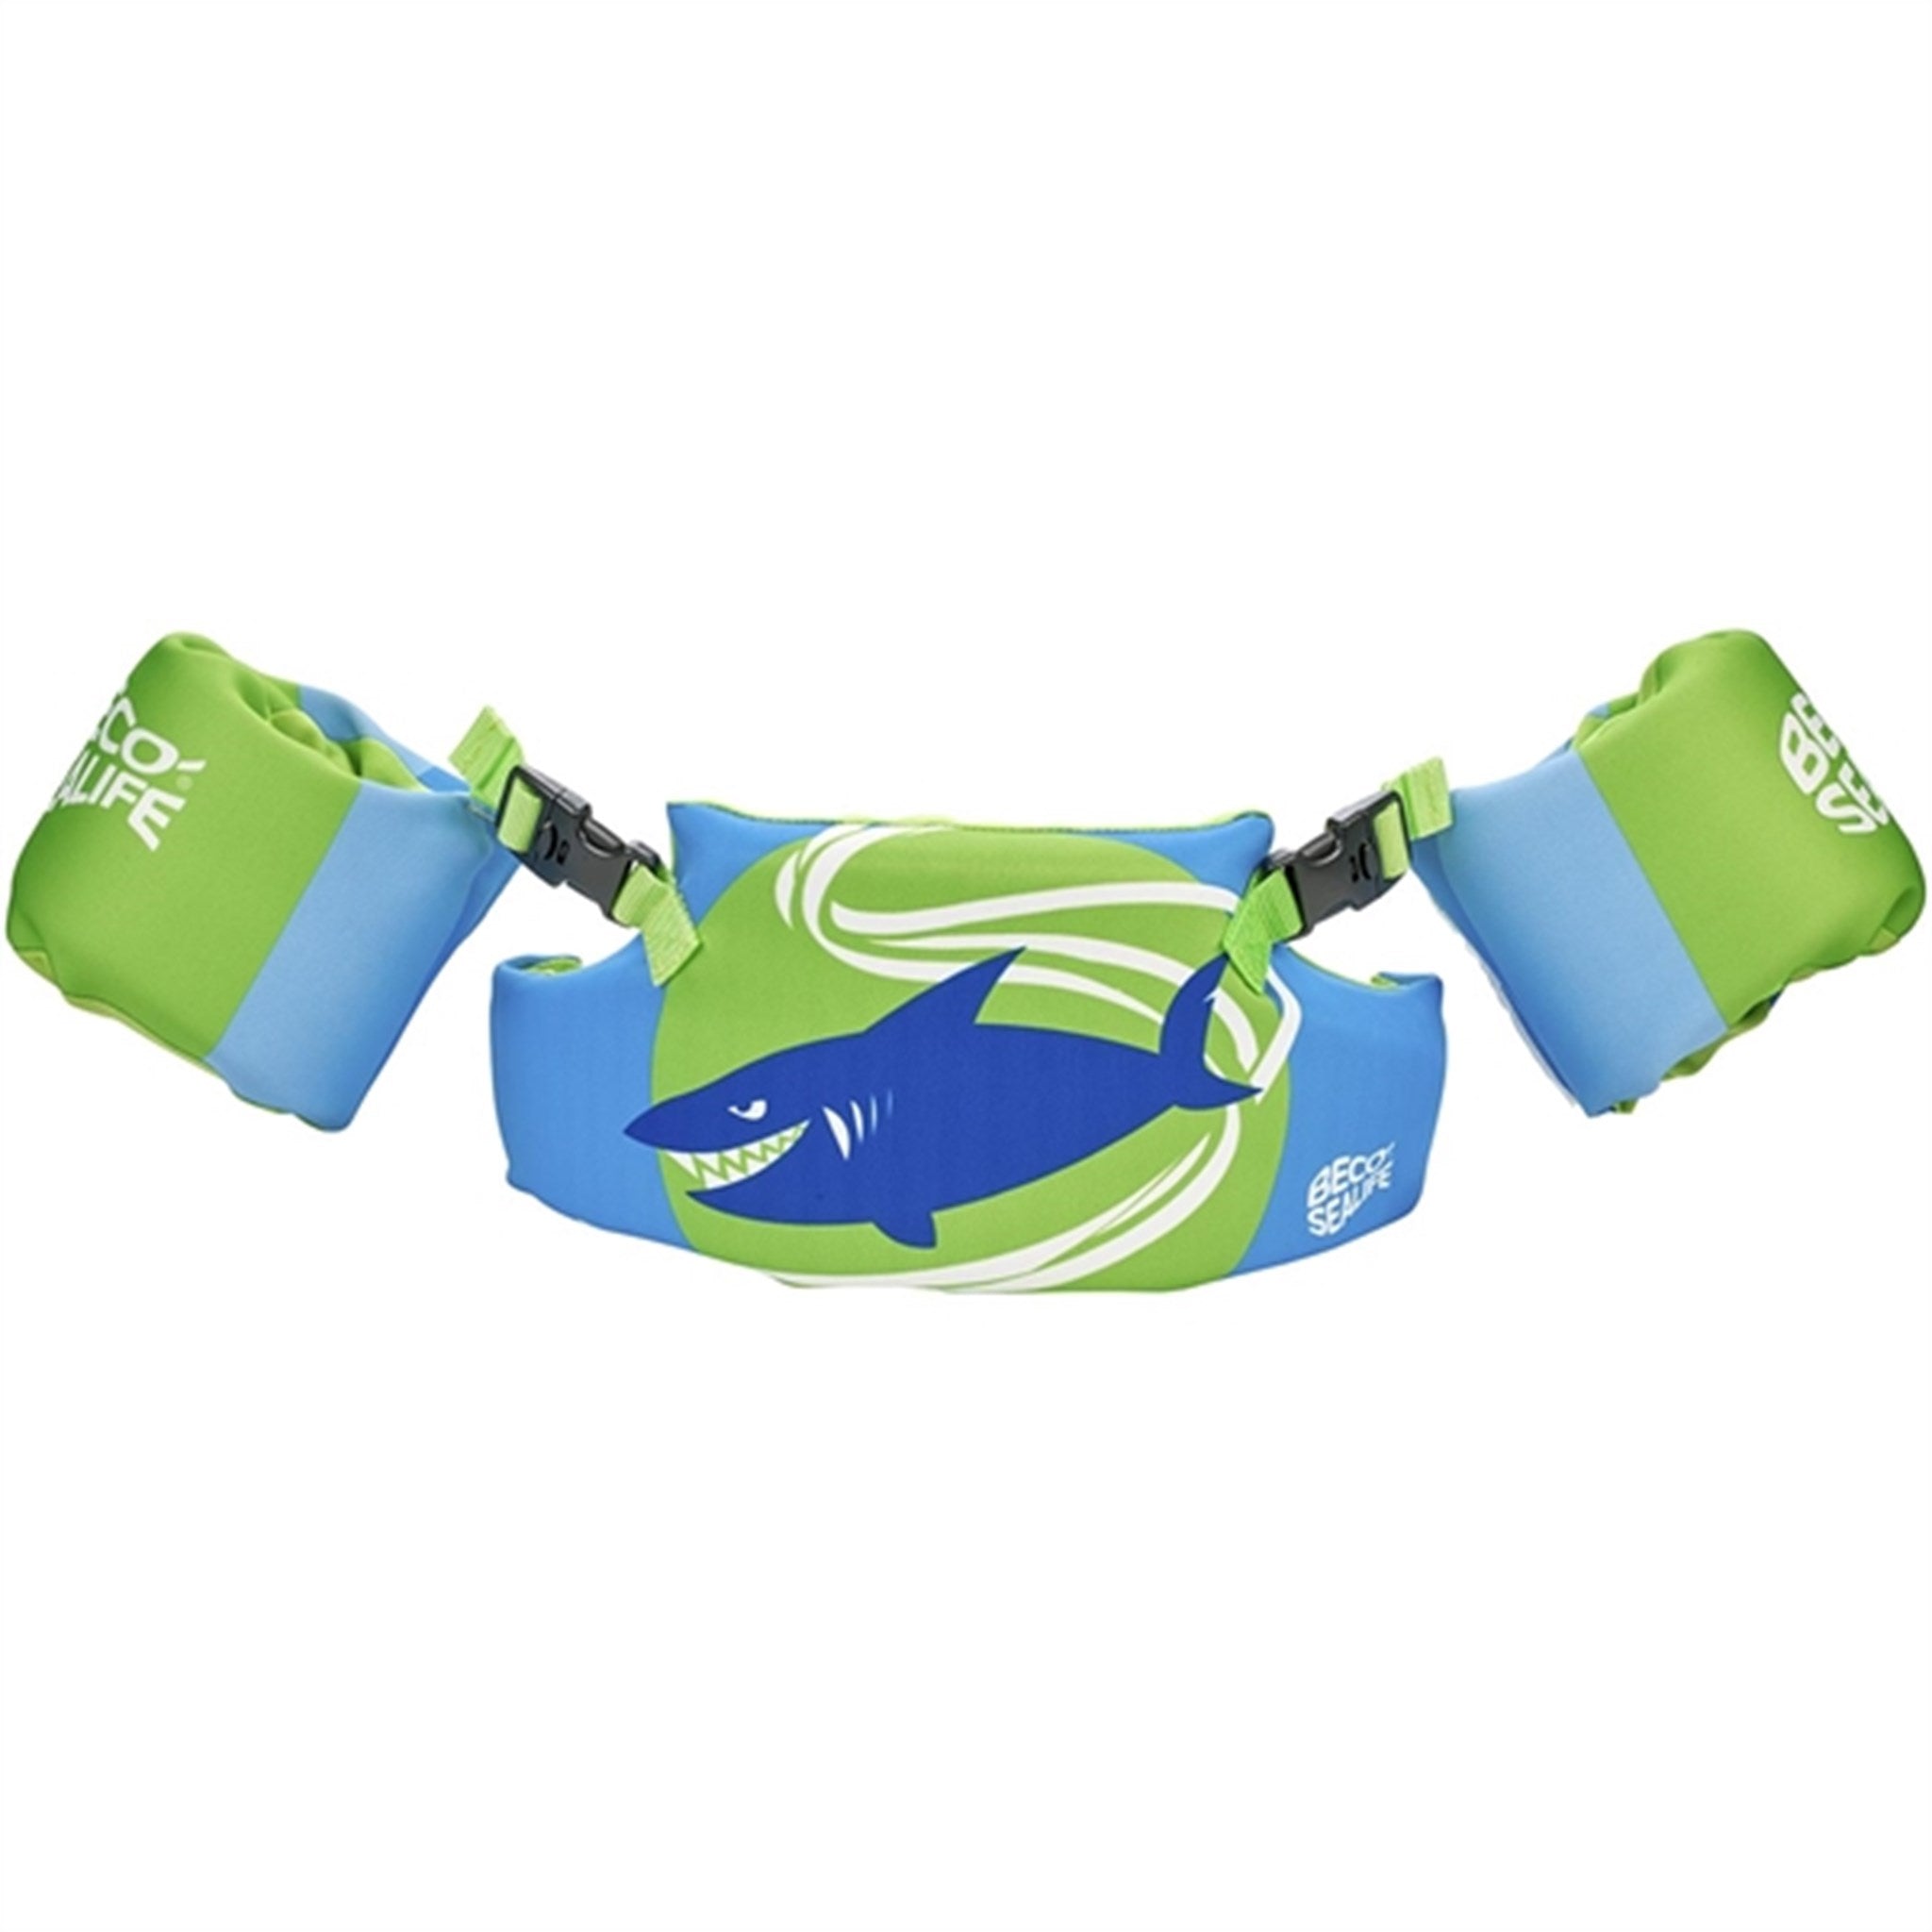 BECO Sealife Neopren Learn-To-Swim Set Green